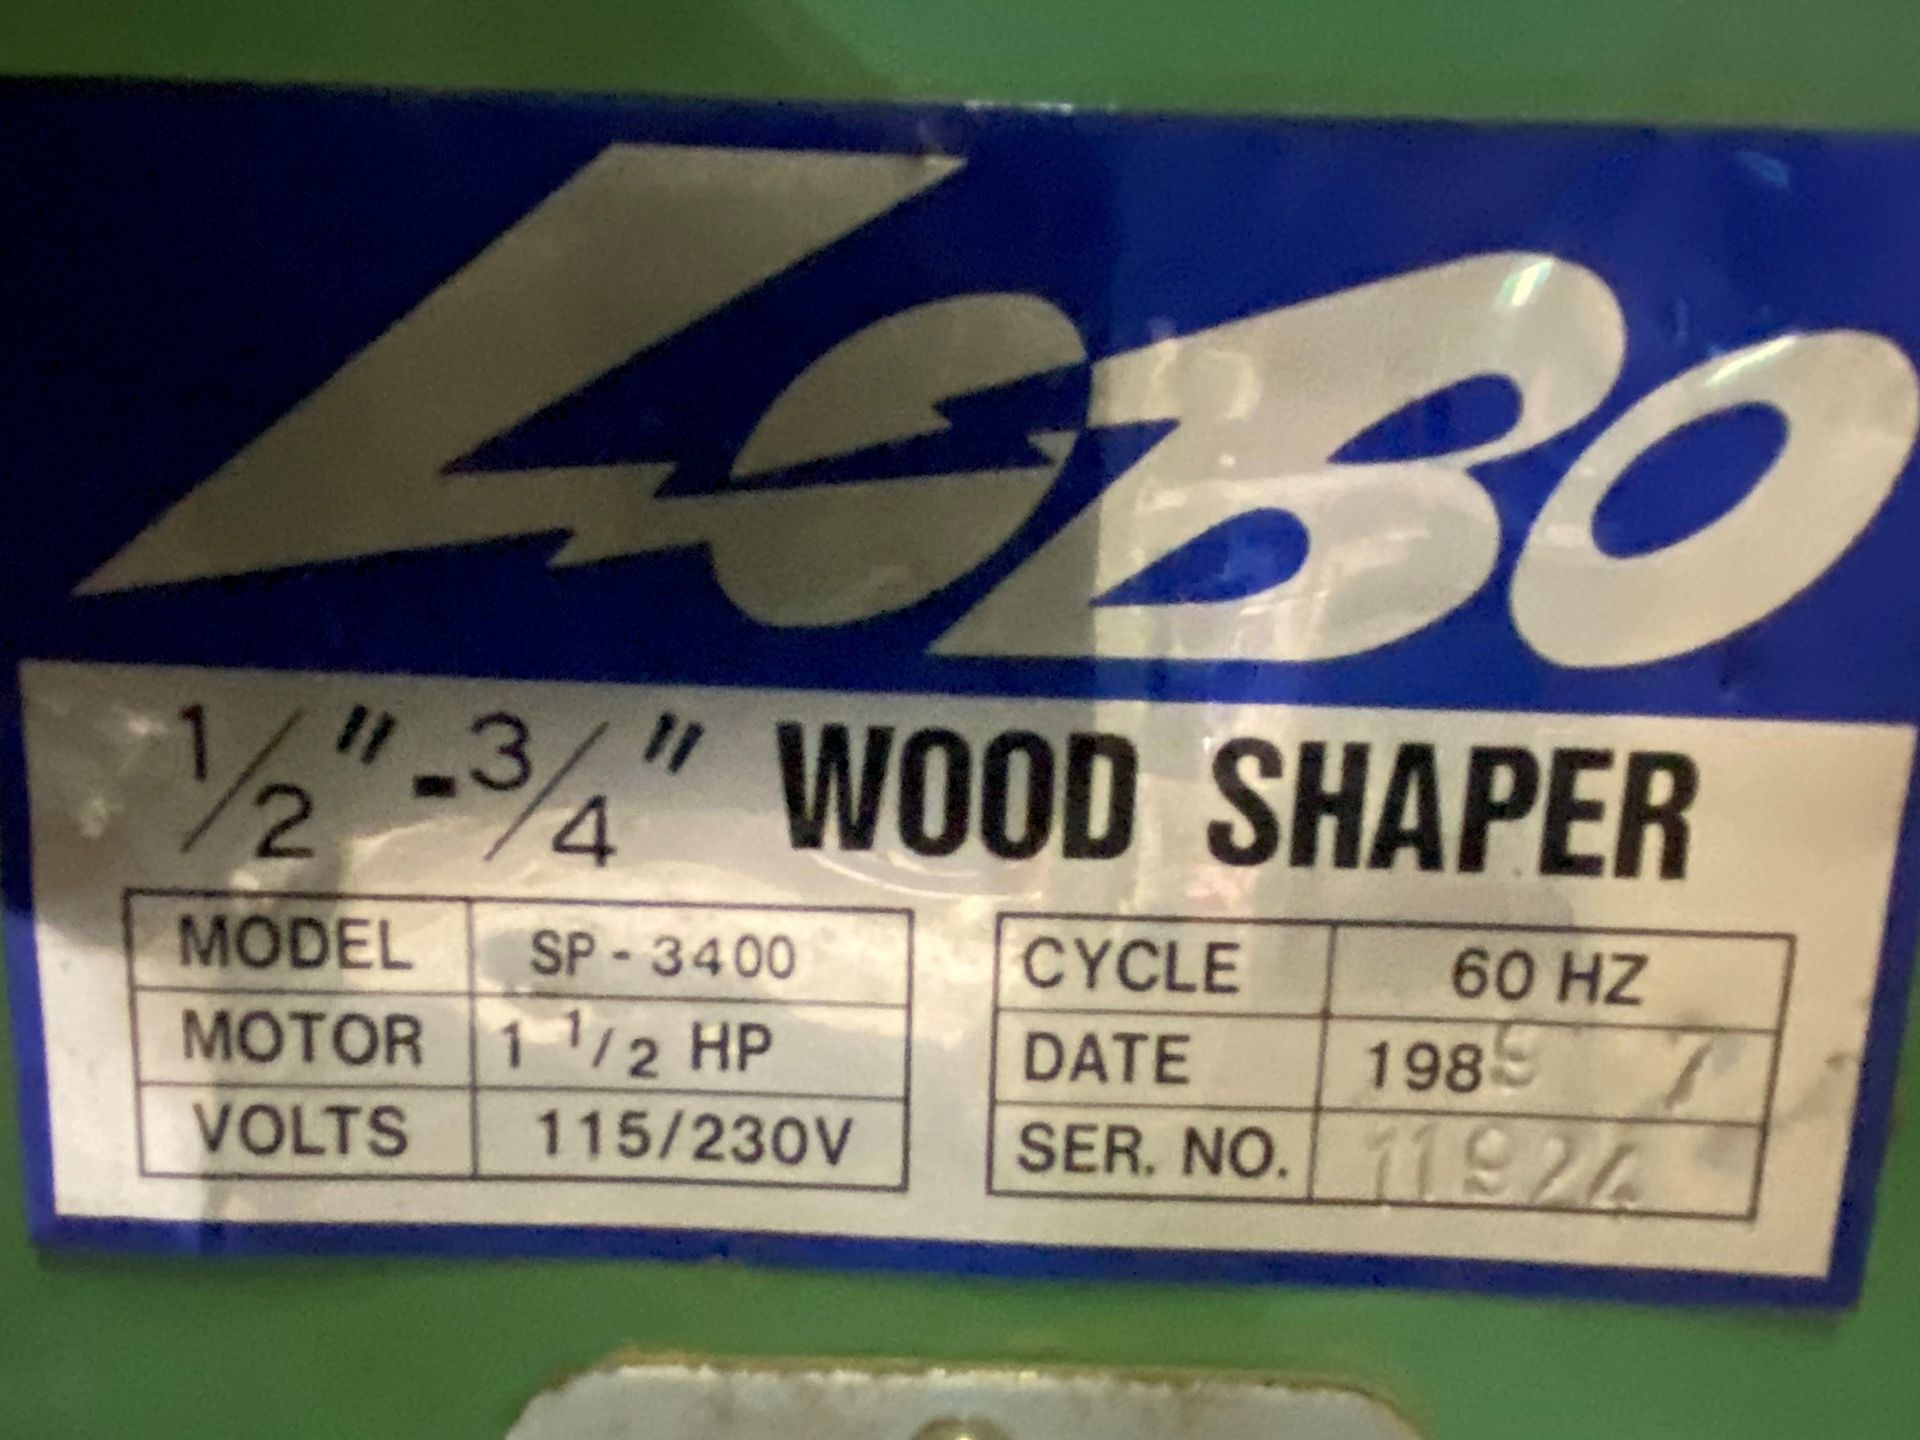 LOBO 1/2" - 3/4" WOOD SHAPER, SP-3400, 115V/230V - Image 2 of 2